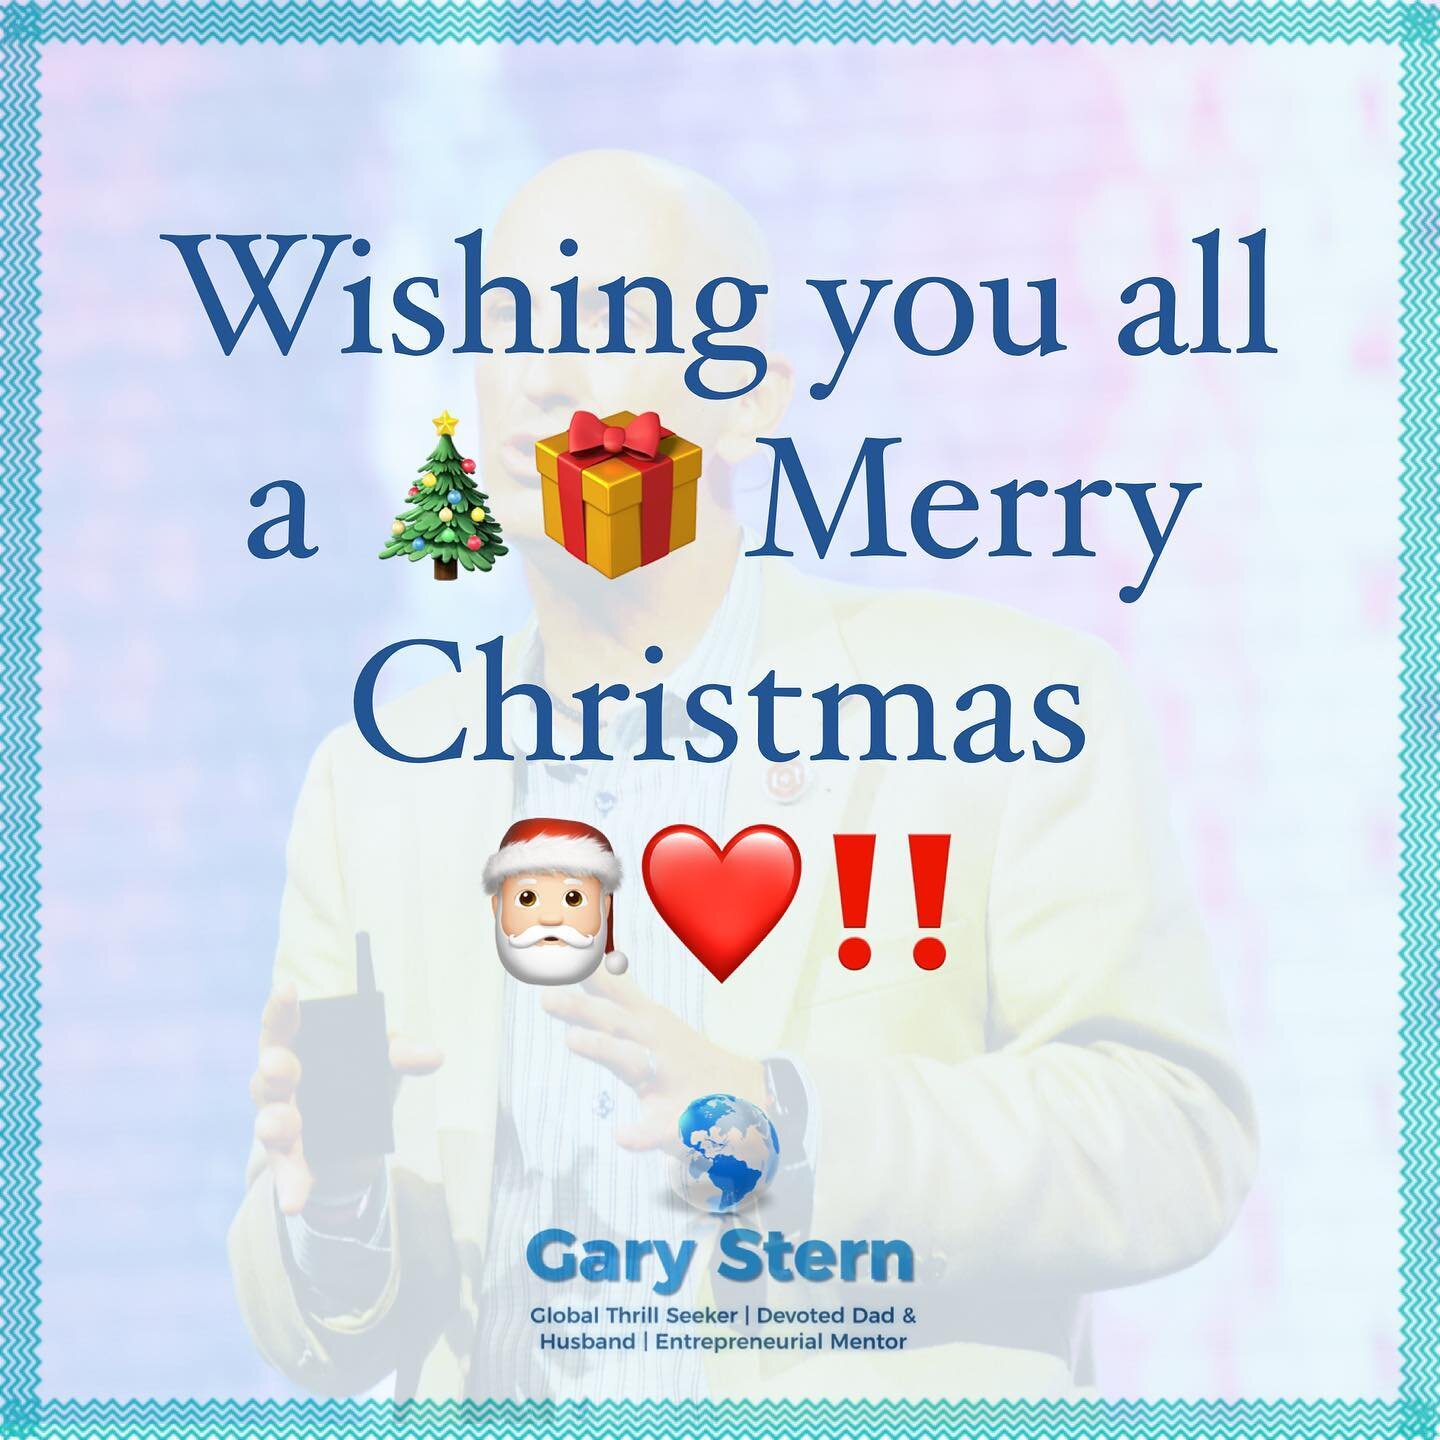 🎄🎁 Merry Christmas 🎅🏻❤️‼️

✄ - - - - - - - - - - - - - - - - - - - - - - - - - - - - - - - 

#family #familytime👪 #familytime #merrychristmas #merrychristmas🎄 #holidays #grateful #indialantic #familylife #familylife❤️ #gratitude #debtfreetimeri